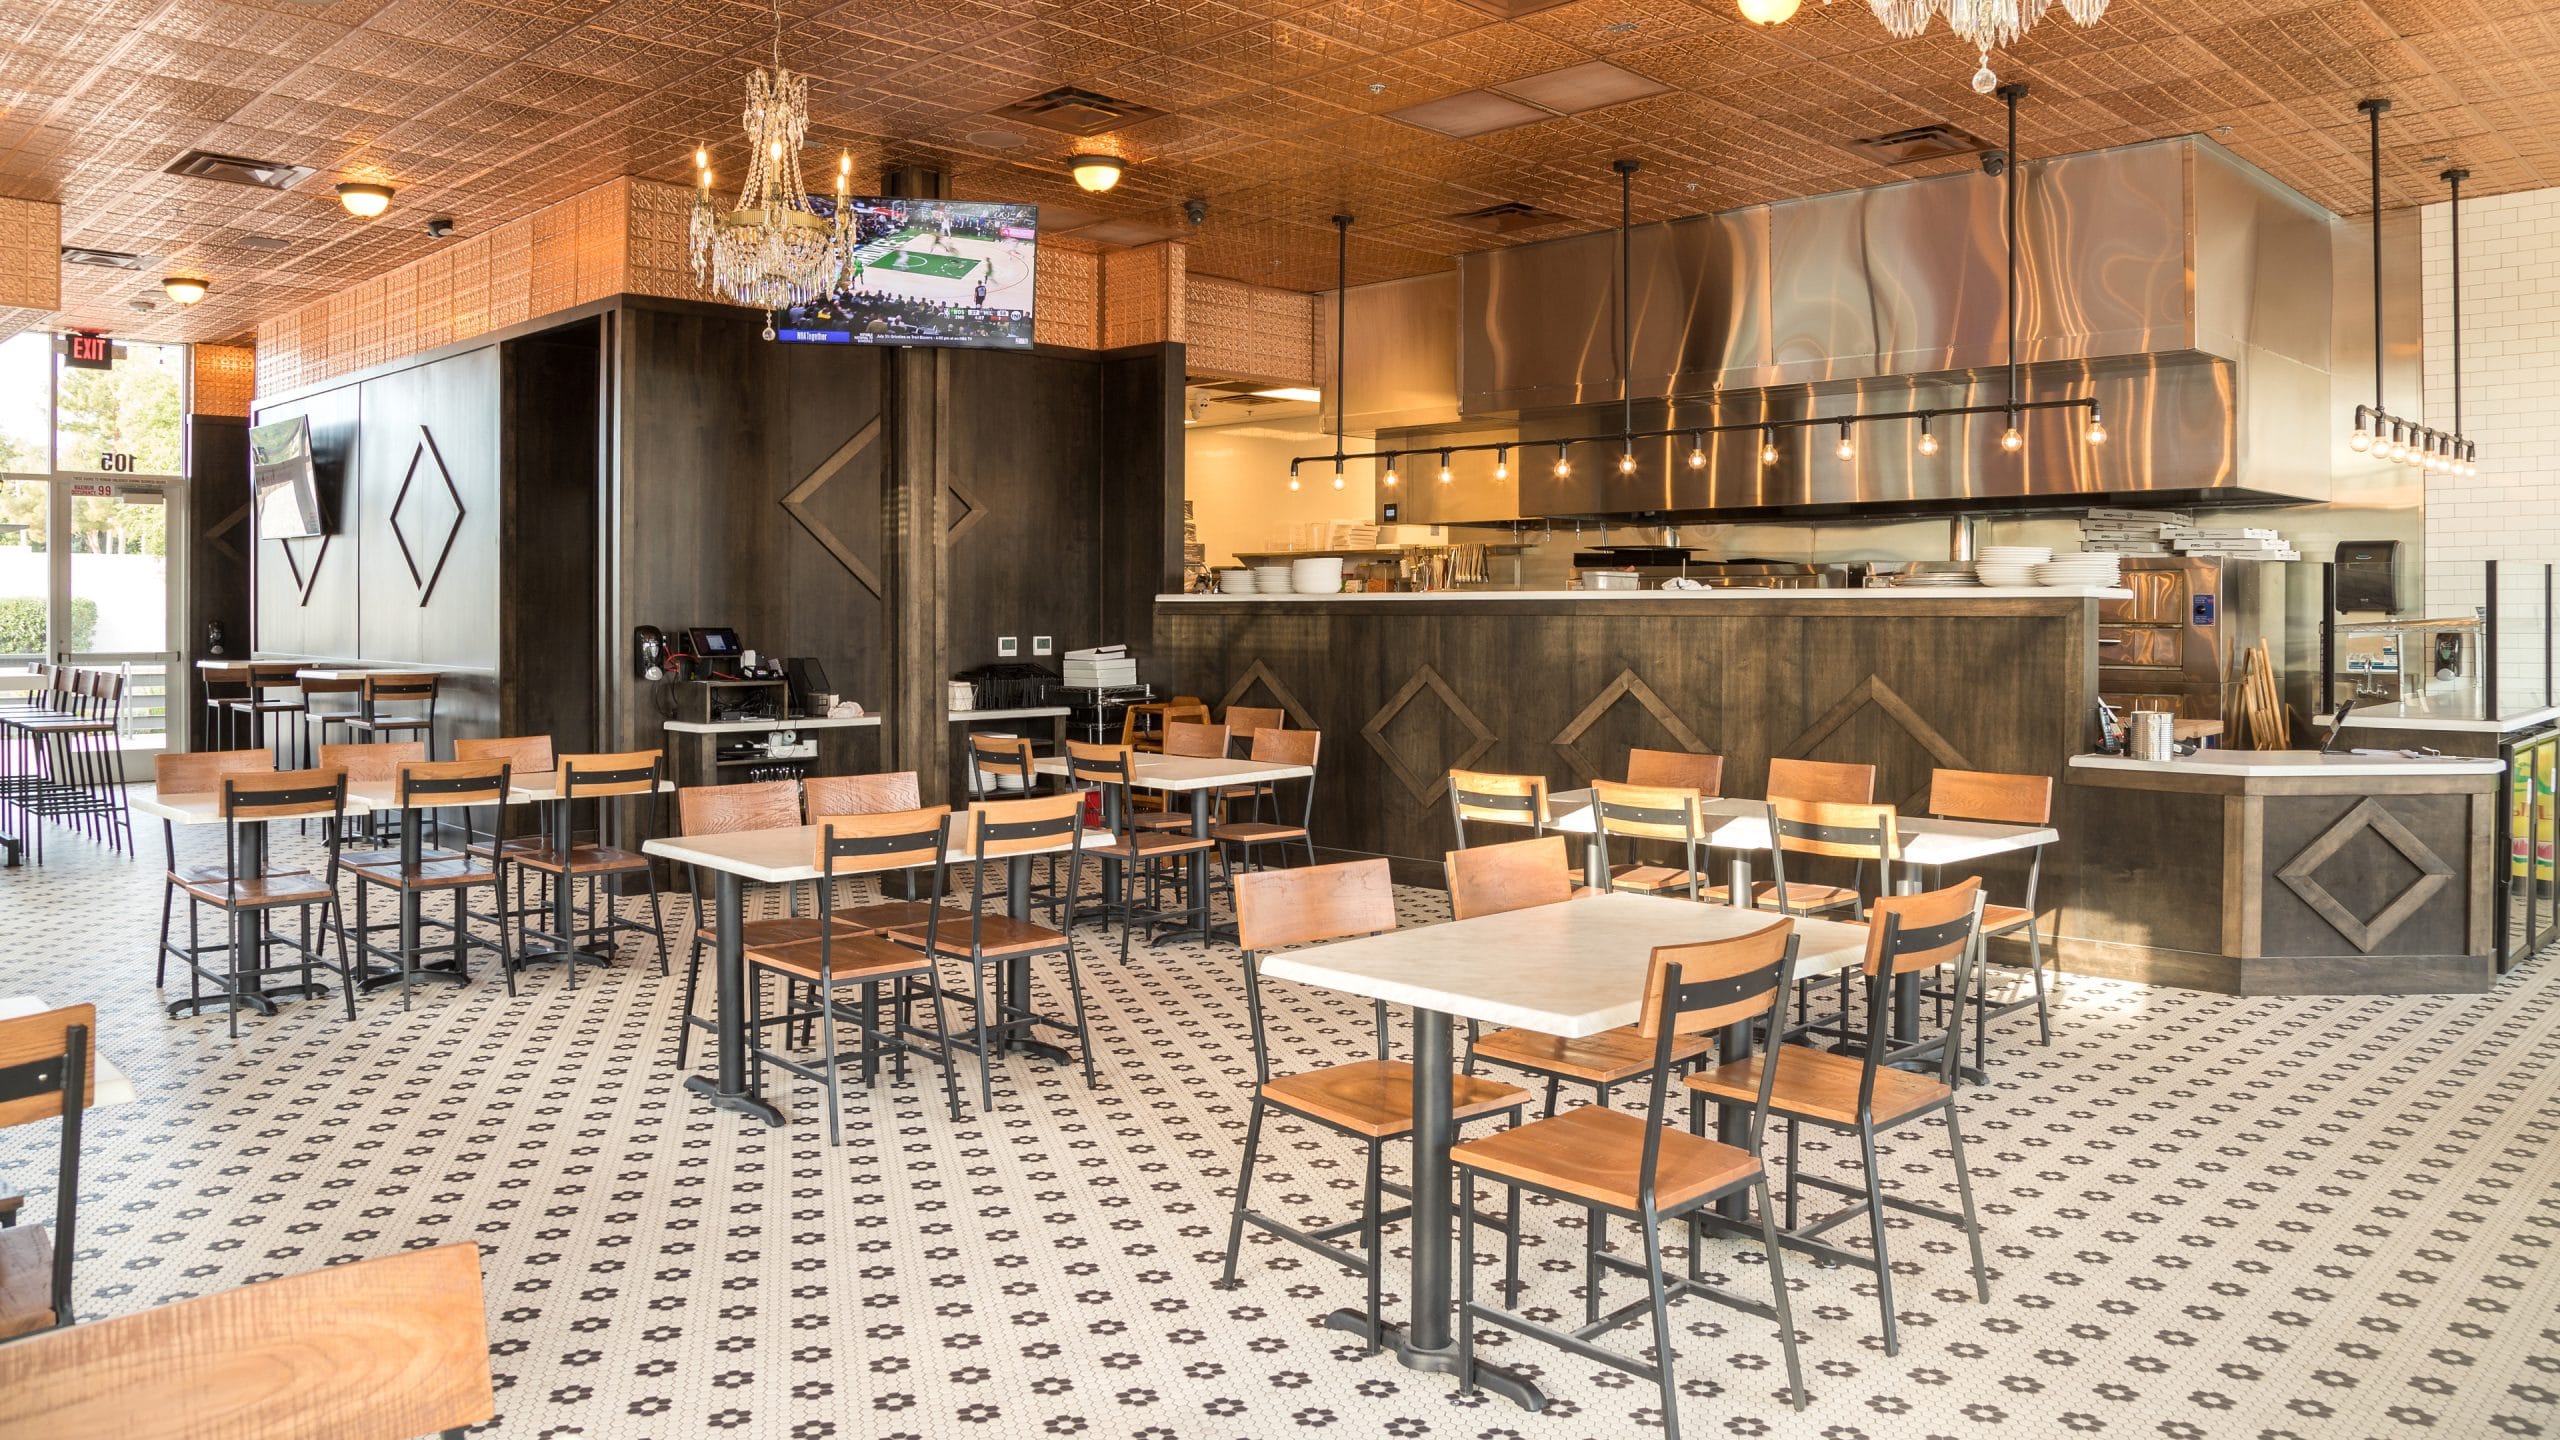 Artichoke Basilles Pizza Restaurant Tenant Improvement scaled